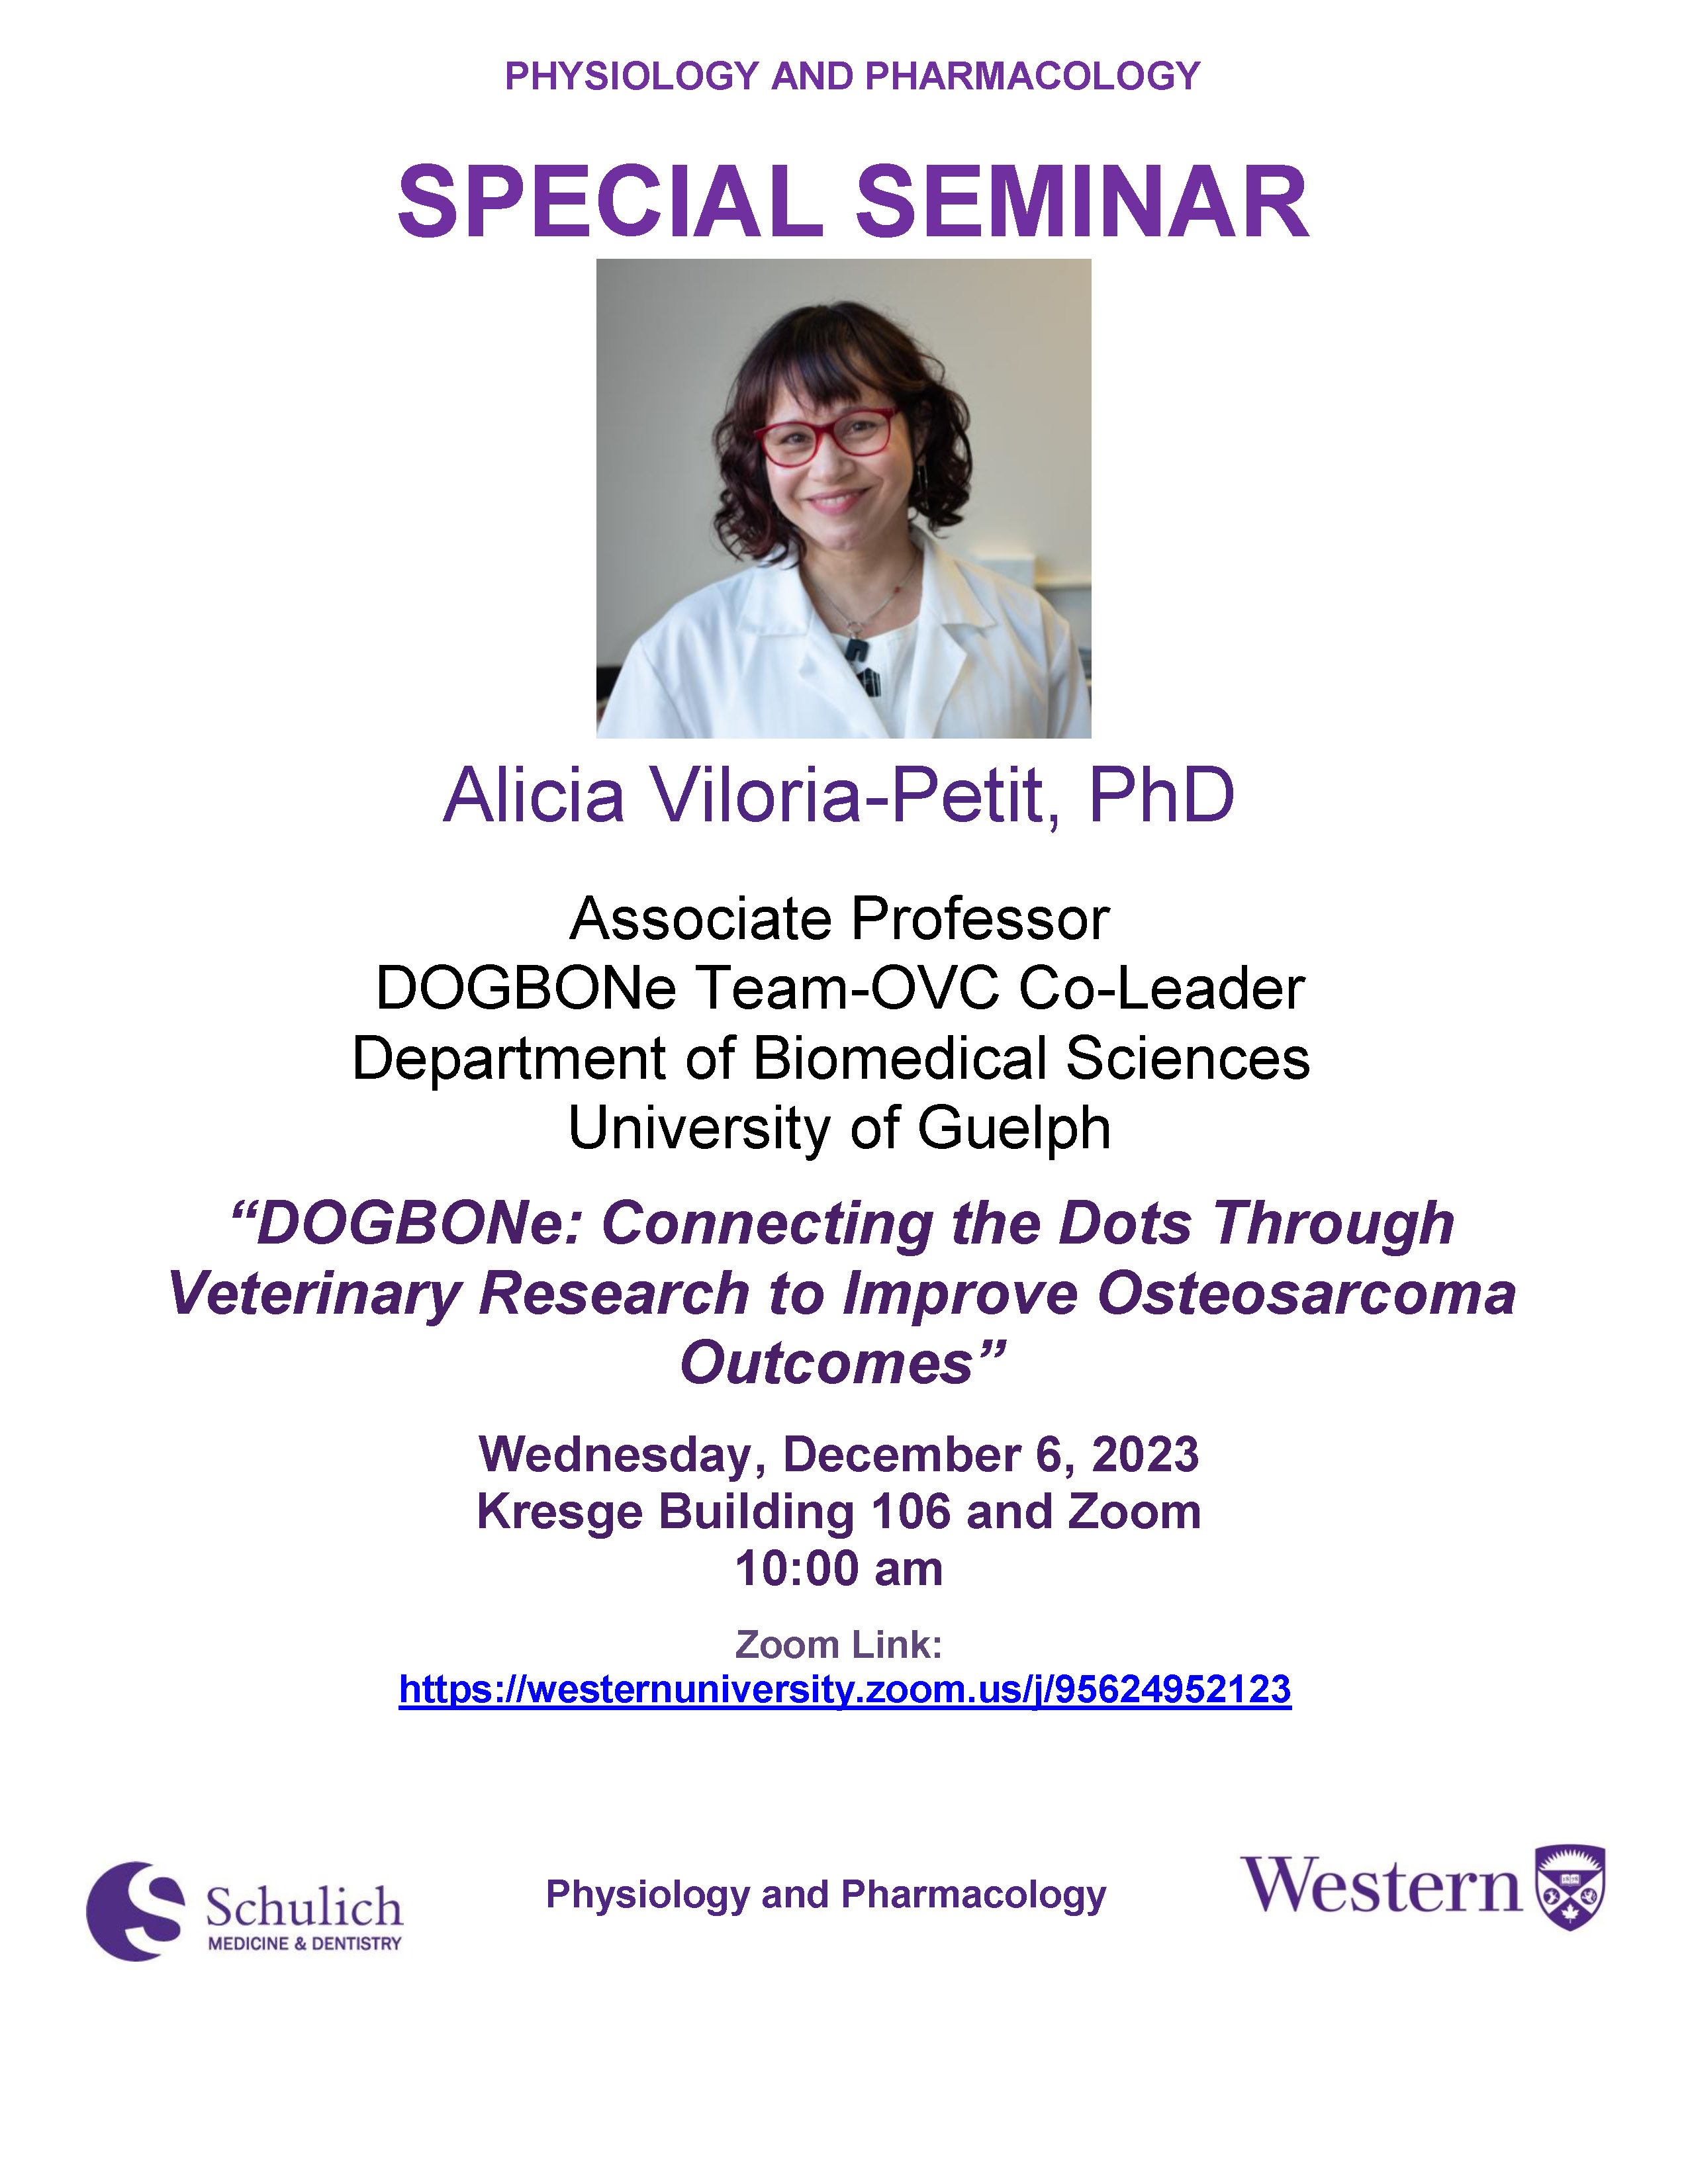 Special-Seminar_-Dr.-Viloria-Petit-Alicia-poster-2023.jpg